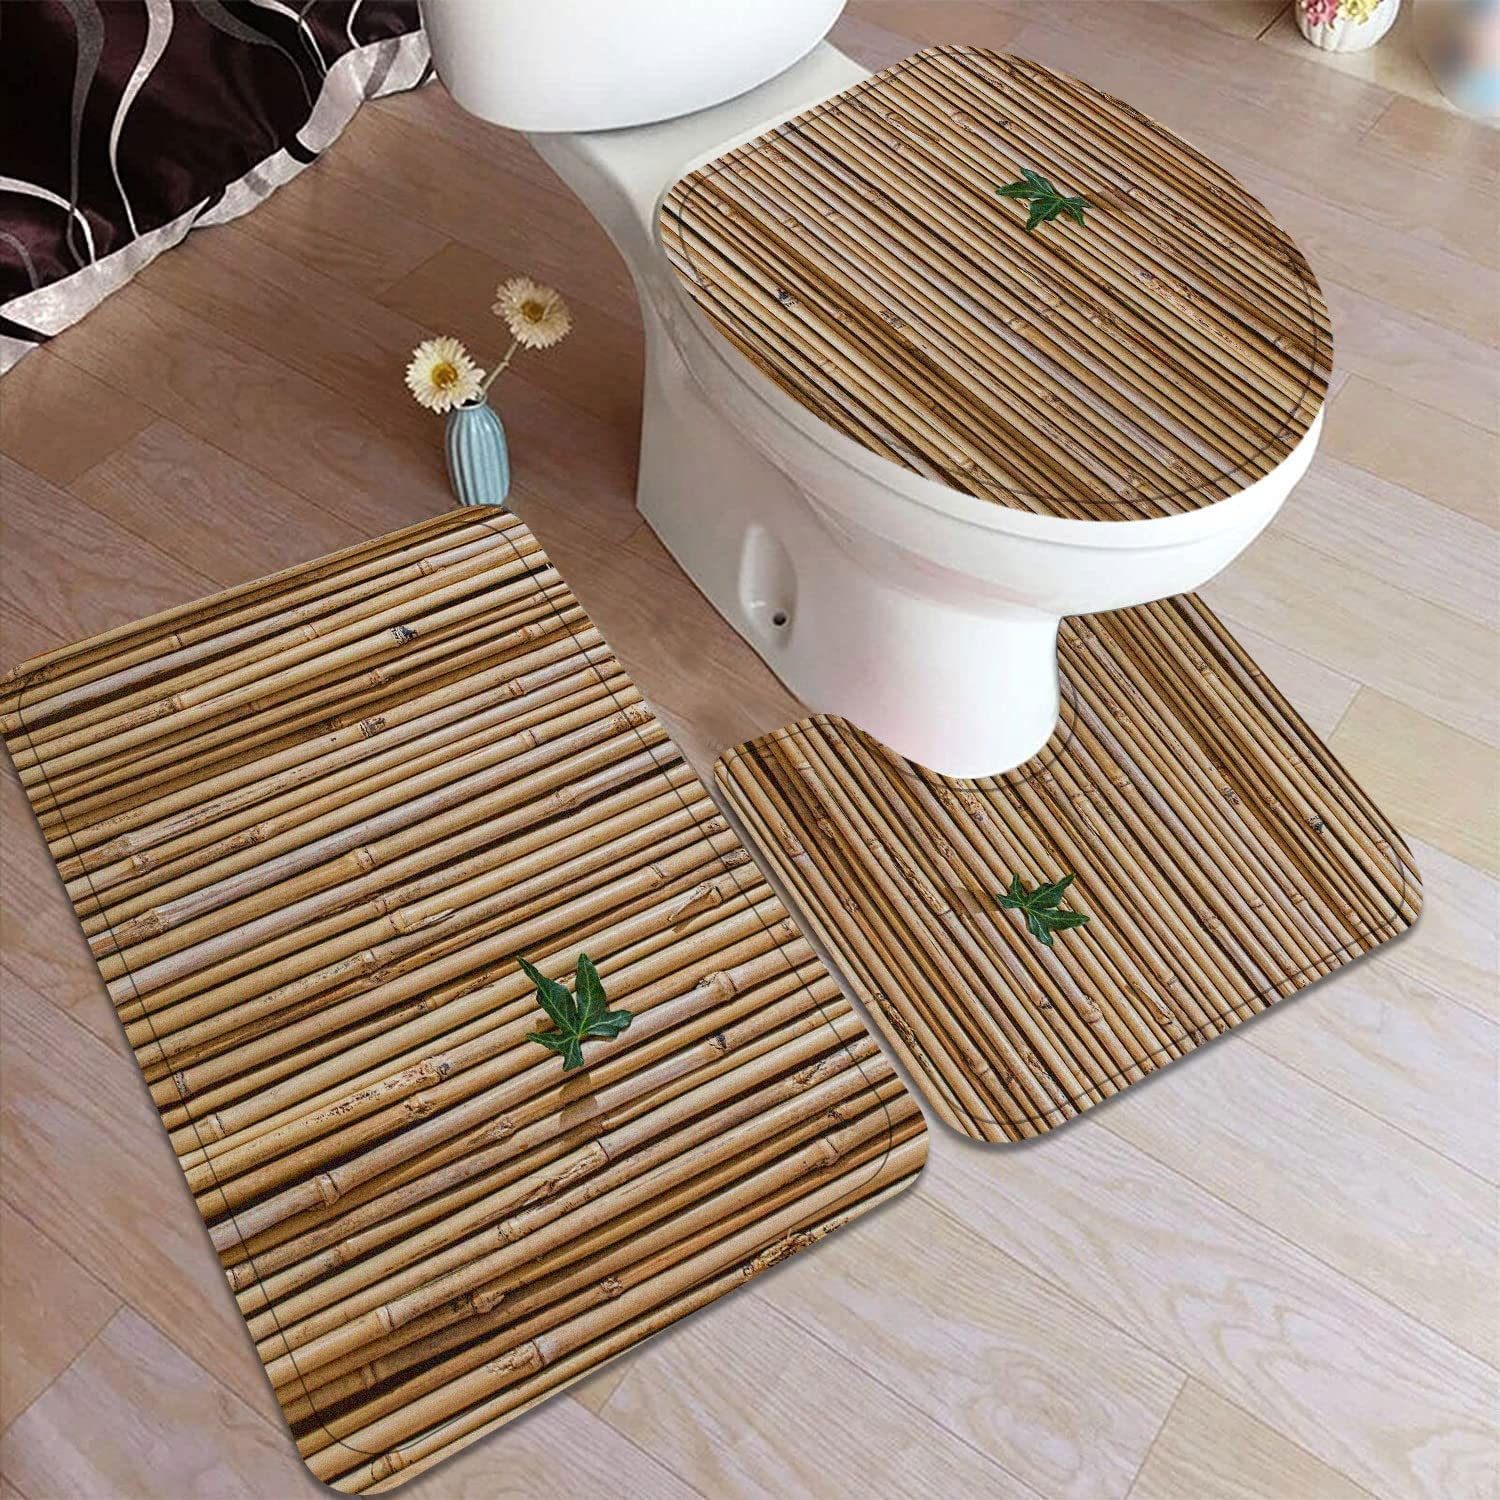 Bamboo Bath Mat for Bathroom - Bamboo Shower Mat Non Slip Waterproof Wooden  Bath Mats Wood Shower Floor Mat for Doorway Sauna Spa Yard Patio Pool